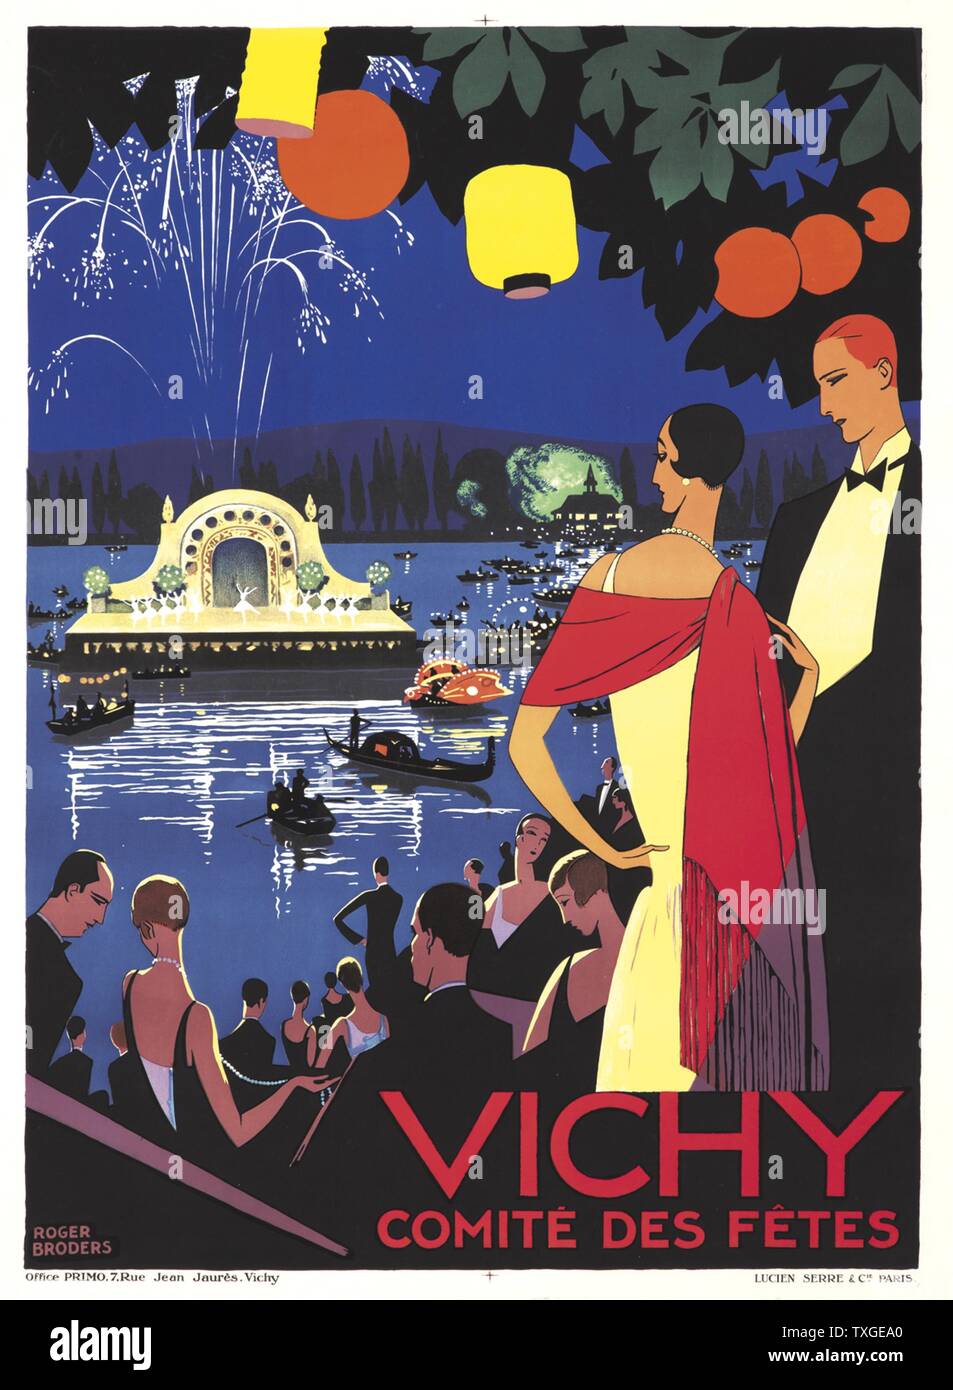 Giclee pinta titulada 'Vichy Comite des Fetes" de Roger Broders (1883-1953), ilustrador y artista francés. Fecha 1926 Foto de stock